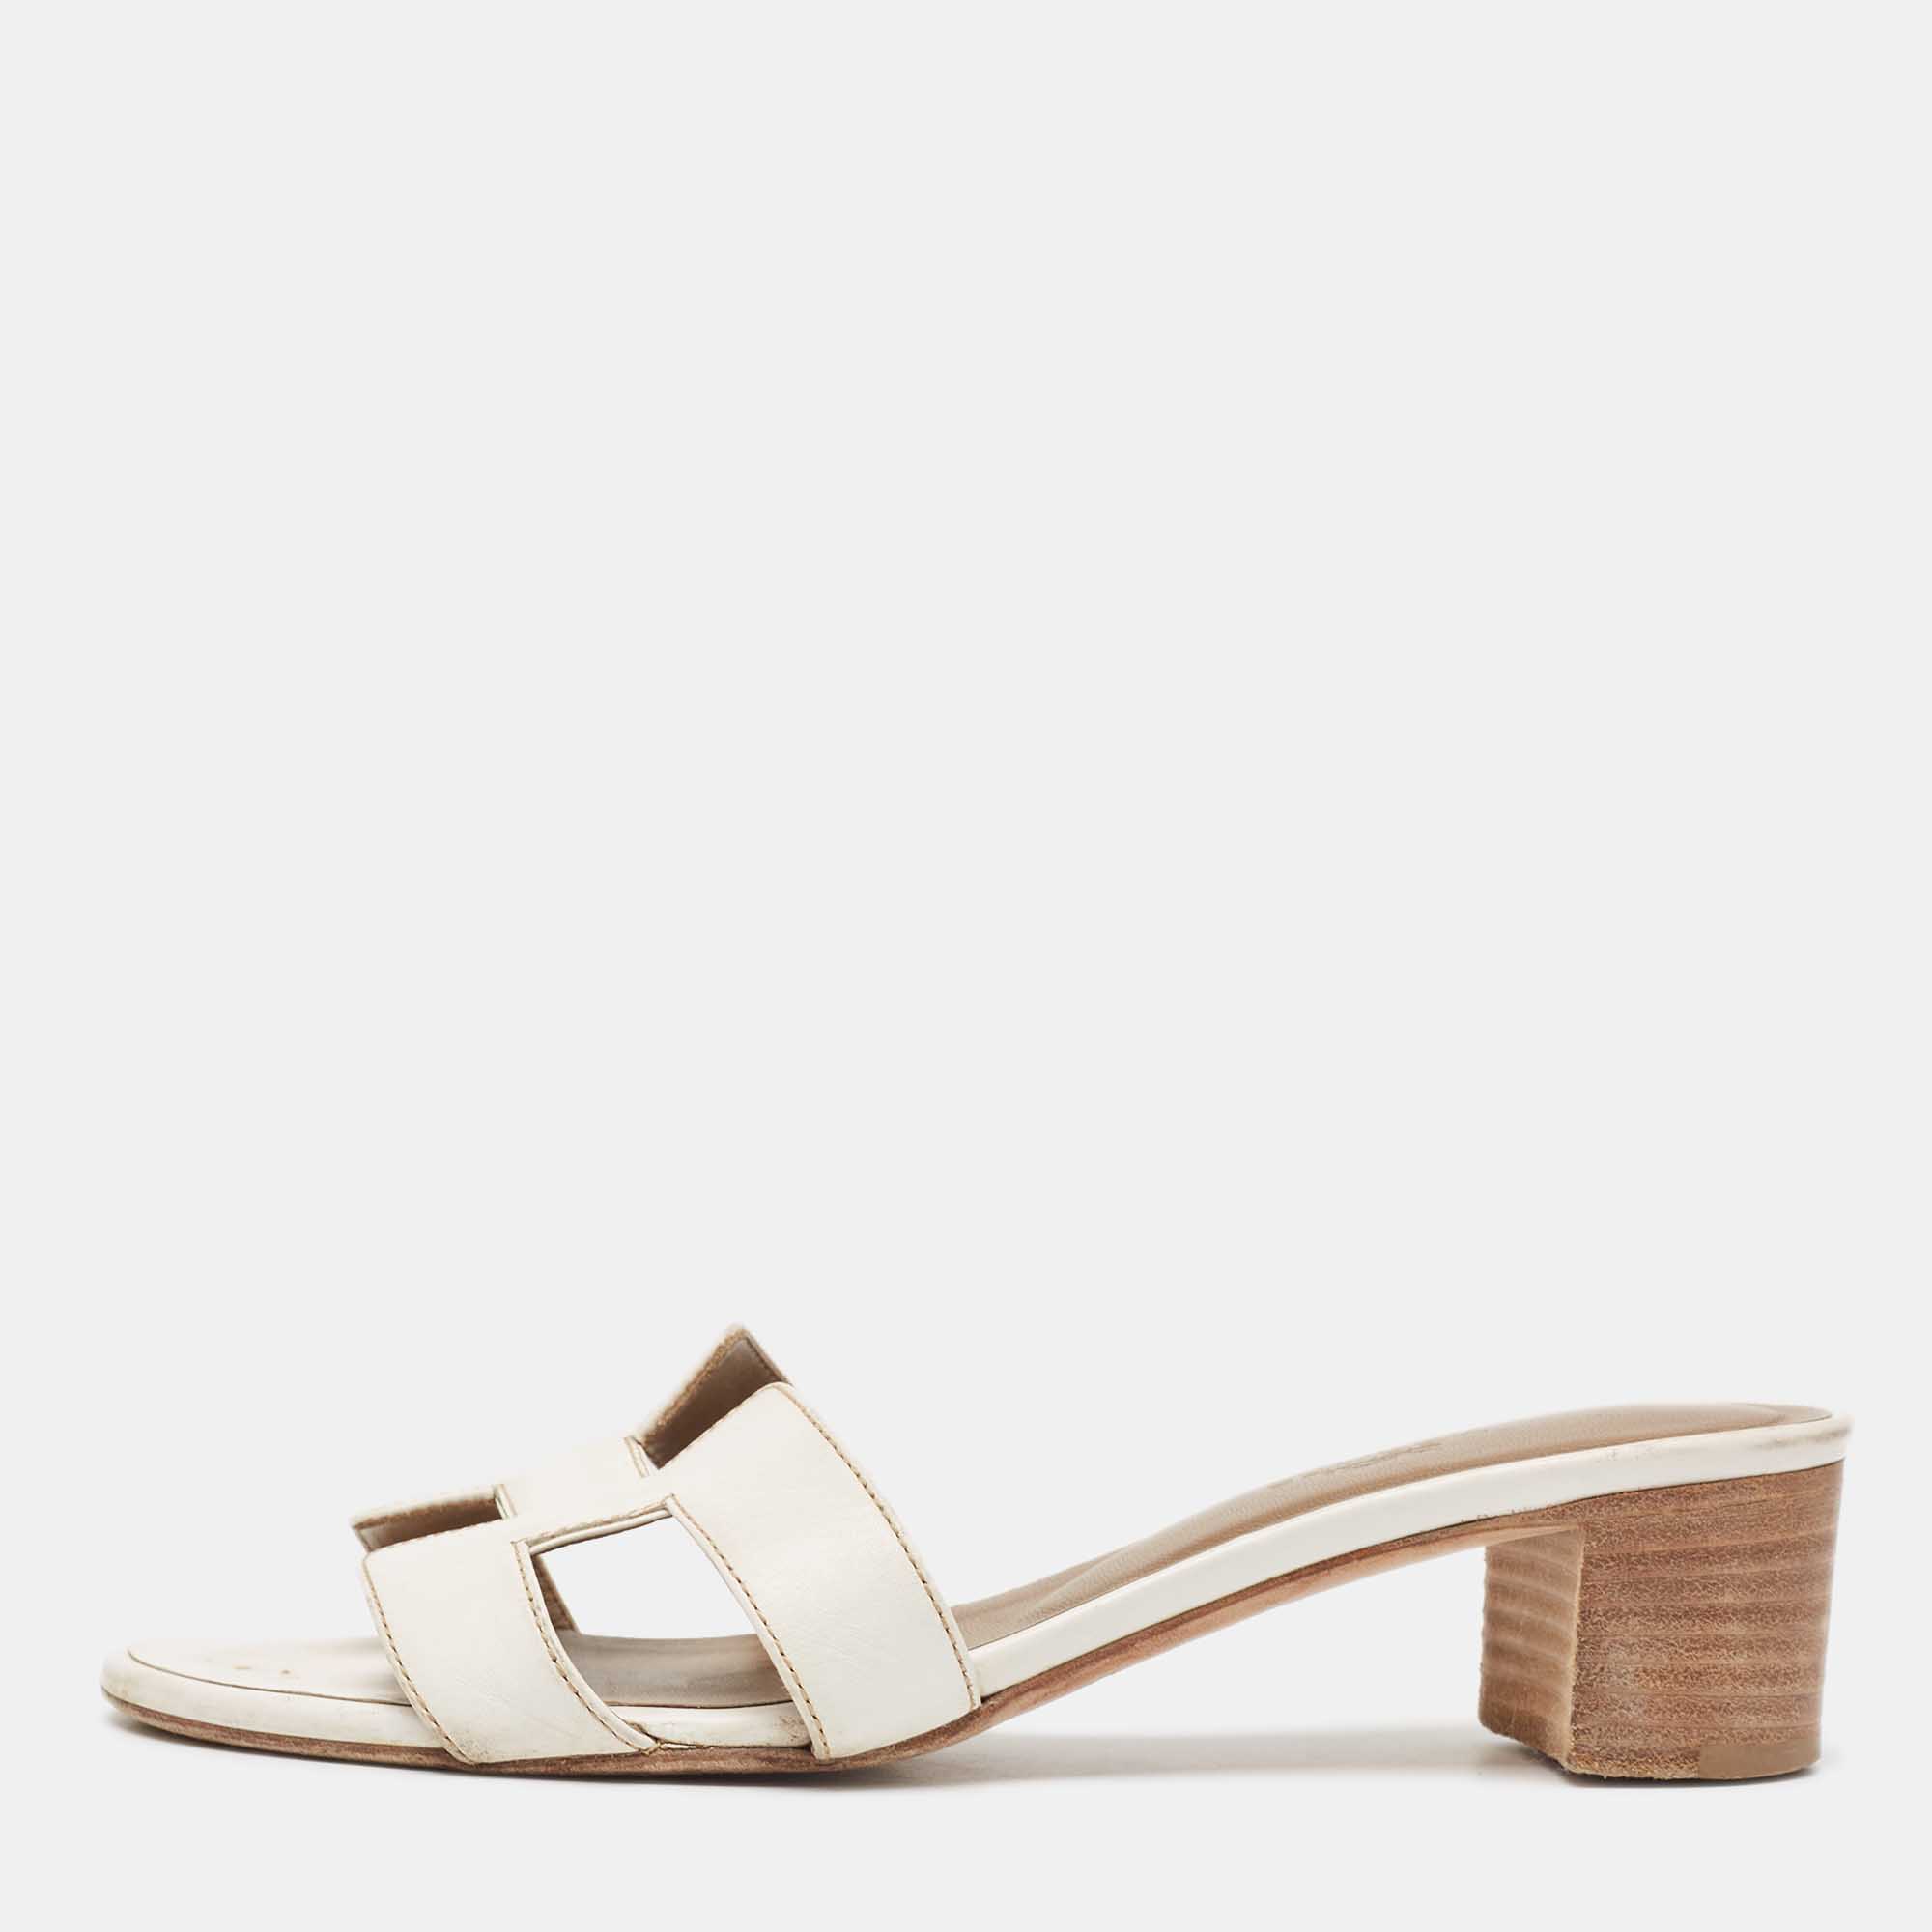 Hermes white leather oasis slide sandals size 36